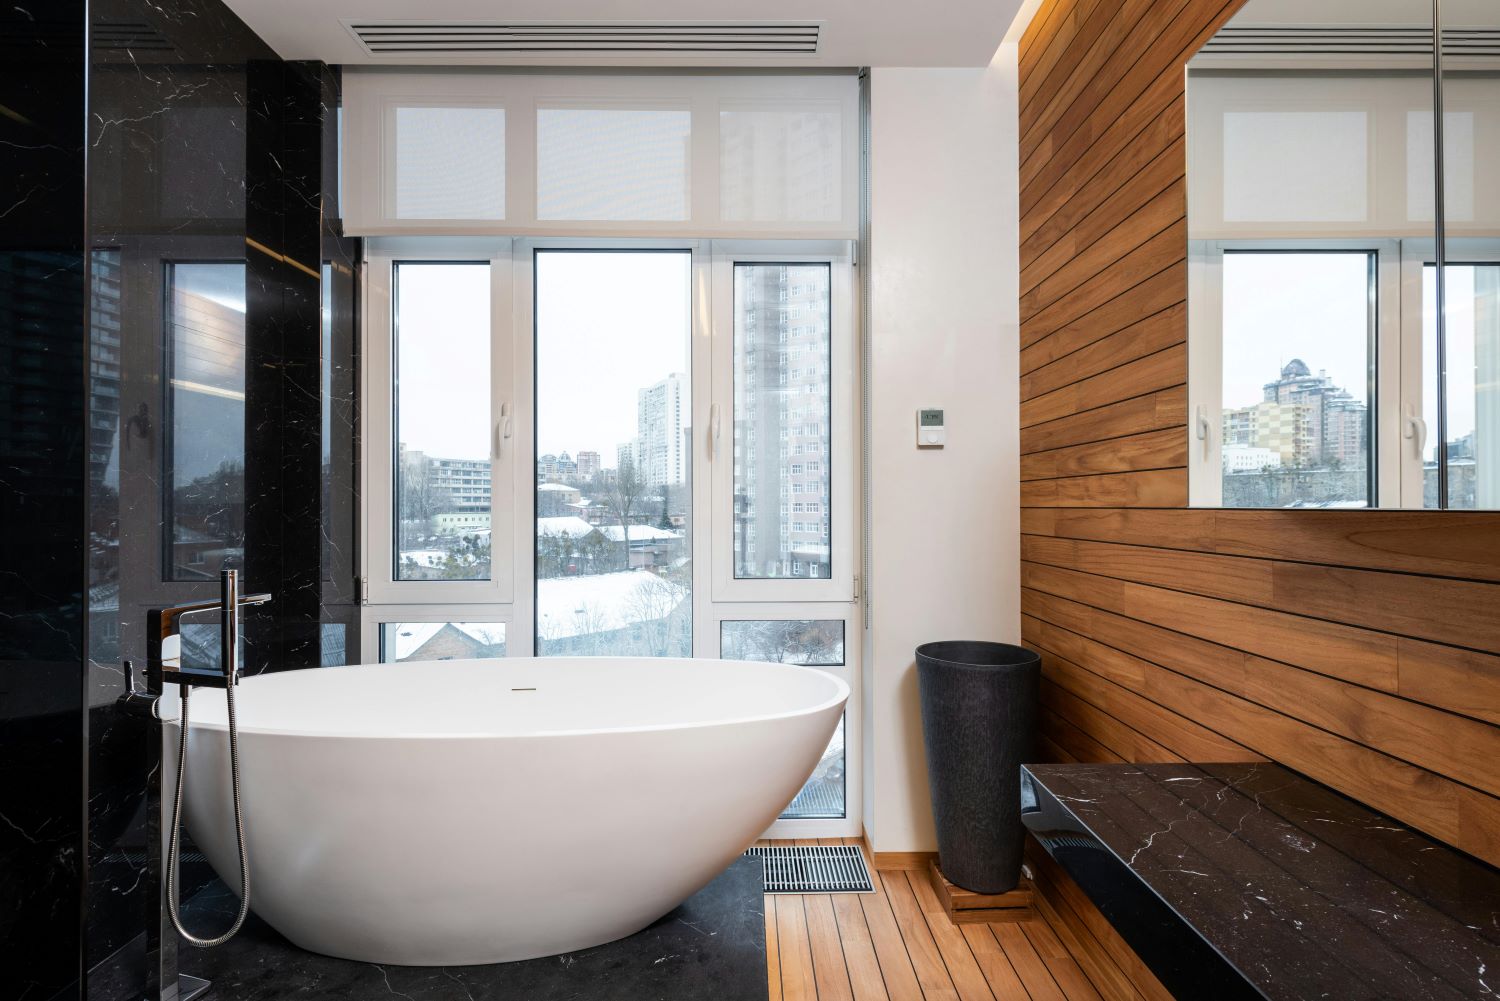 Modern bathroom interior with panoramic window